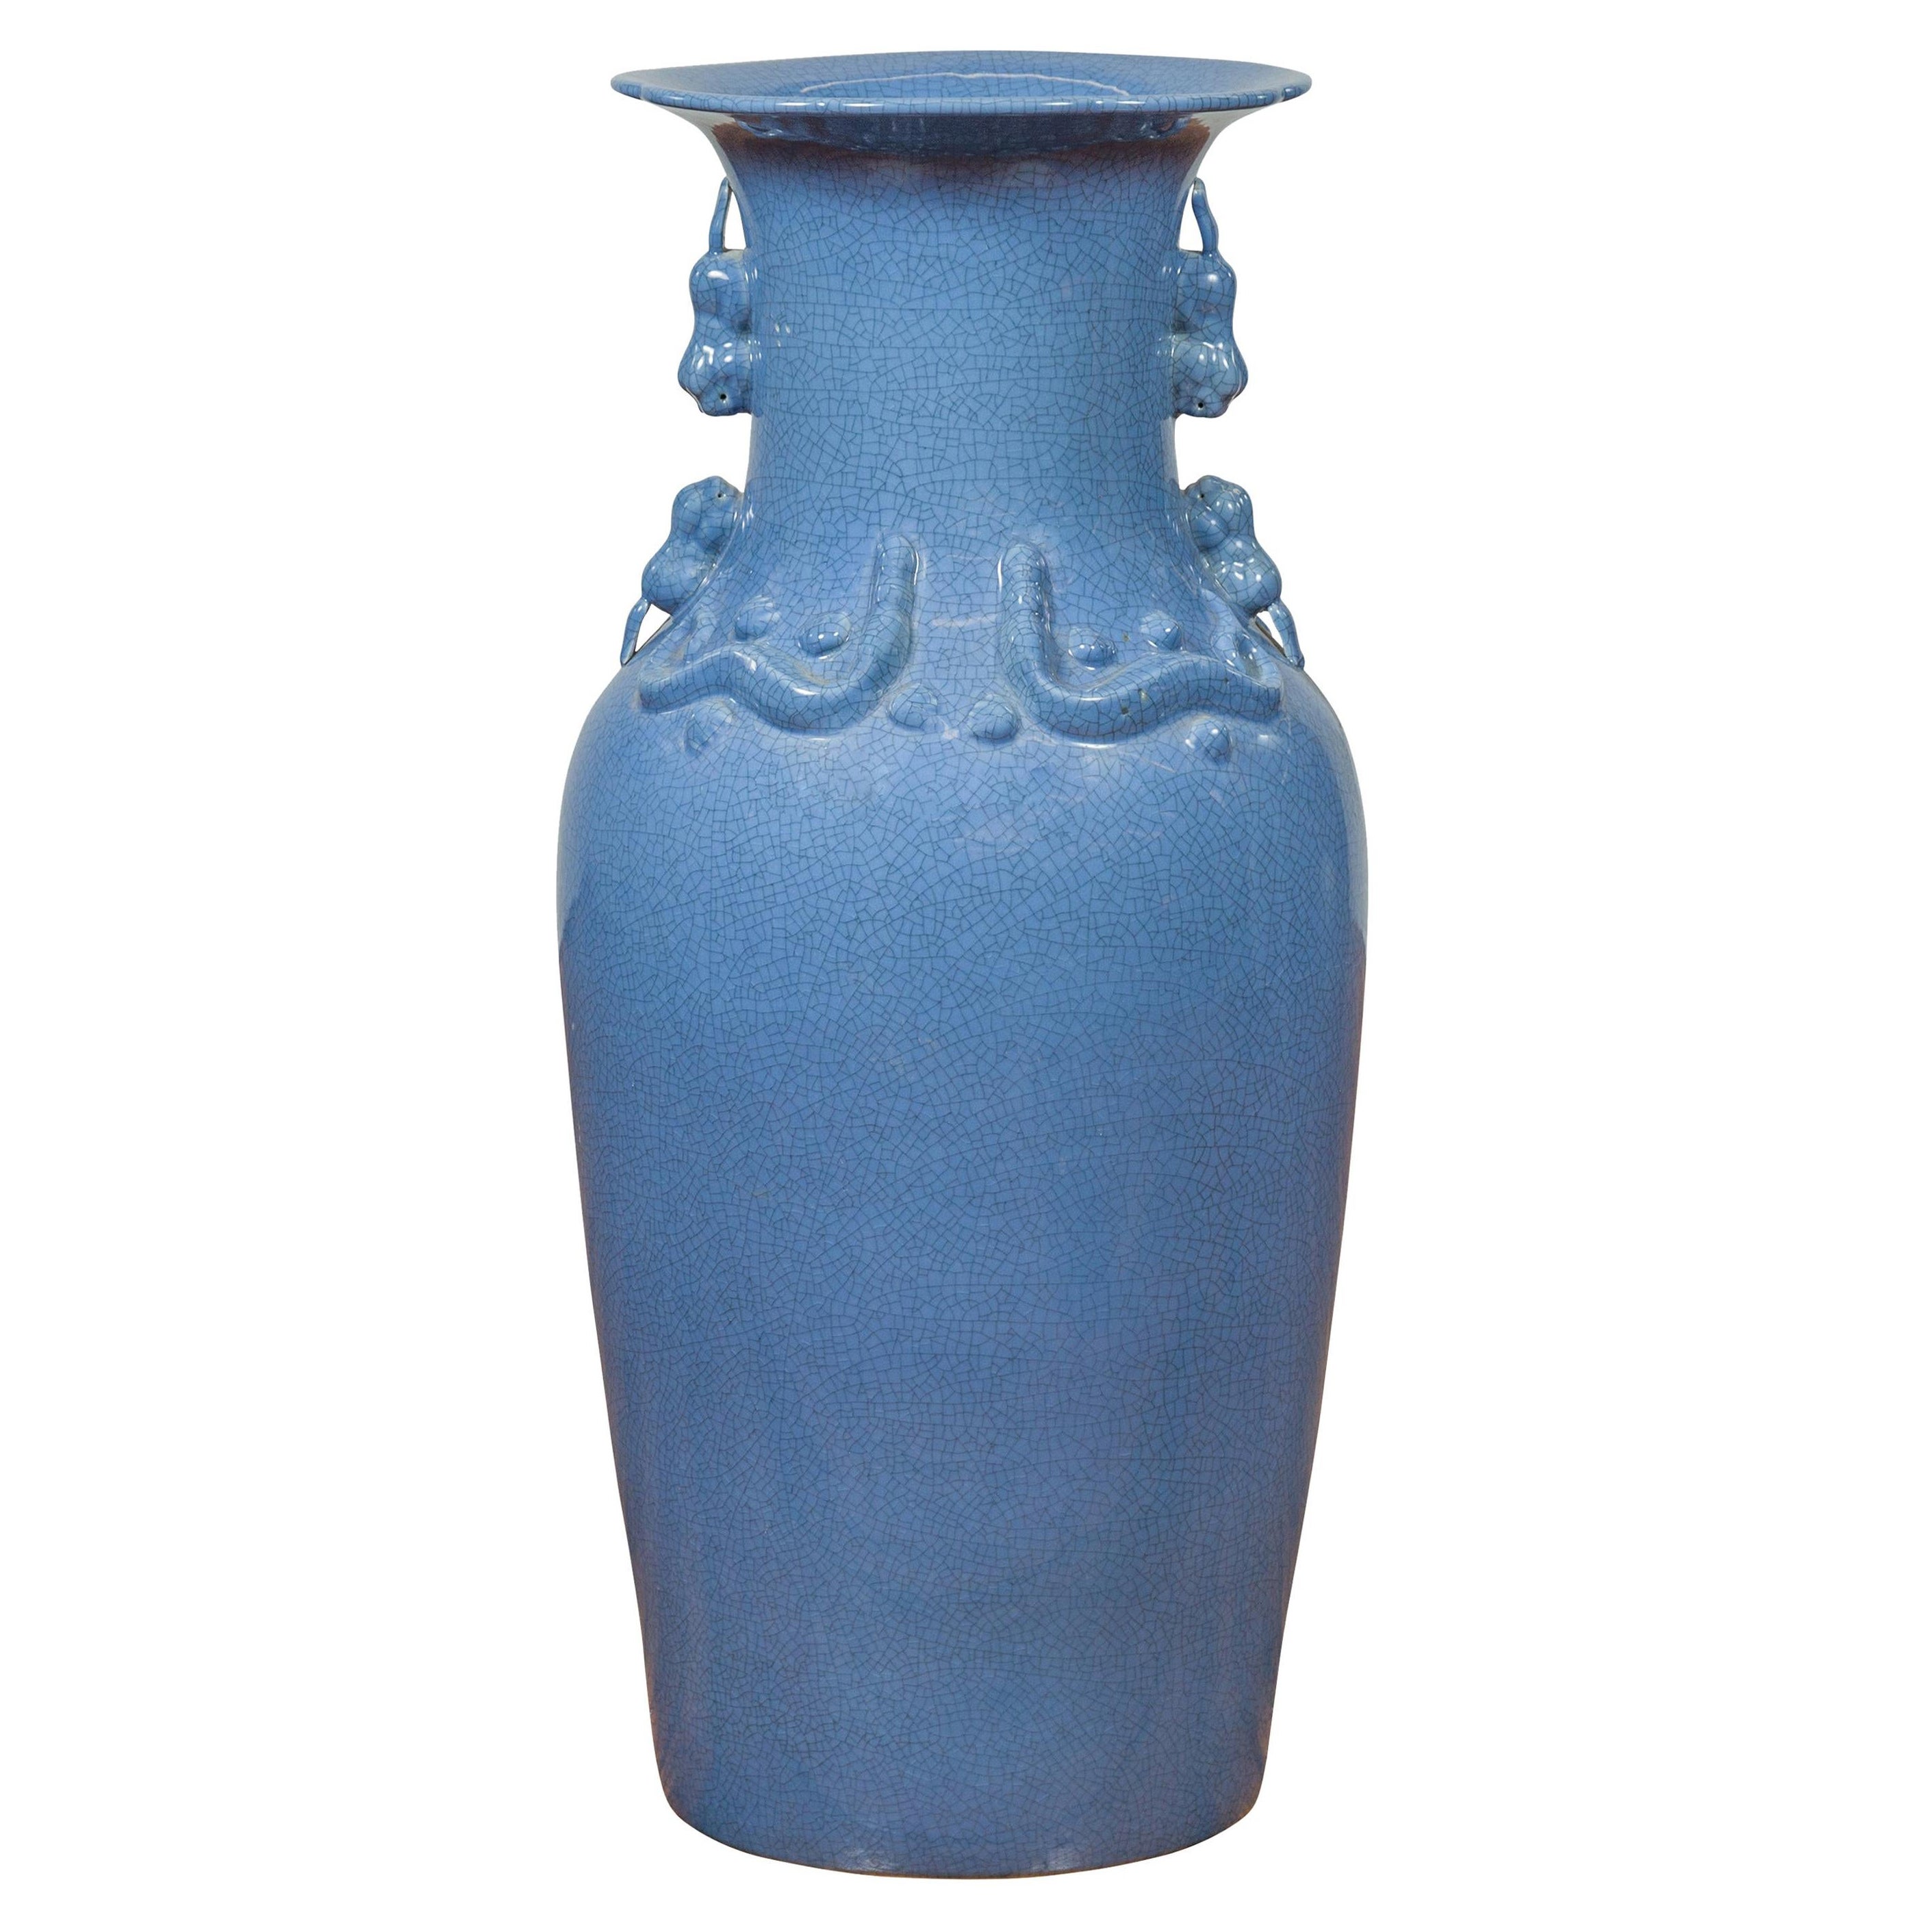 Ceremonial Altar Vase with Crackled Blue Glaze and Decorative Motifs For Sale